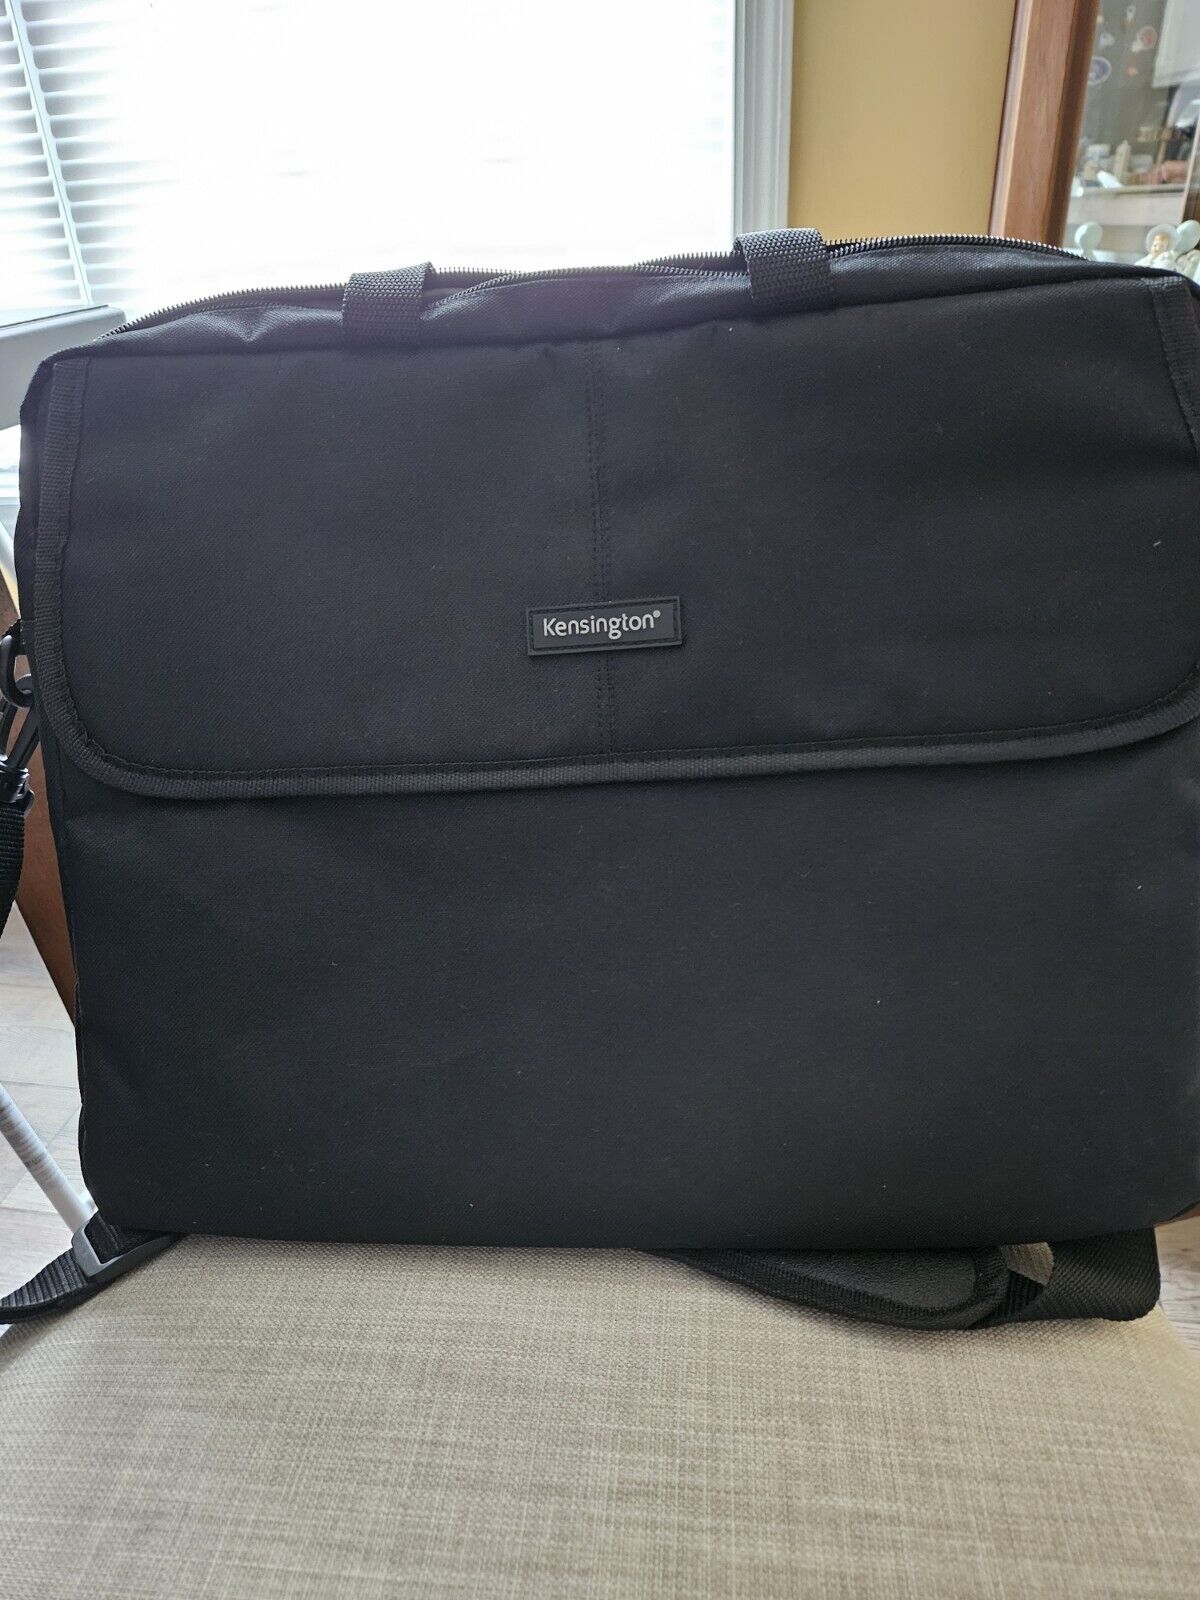 Kensington Black Laptop Carrying Bag Zipper Closure w/ Large Front Pocket EUC